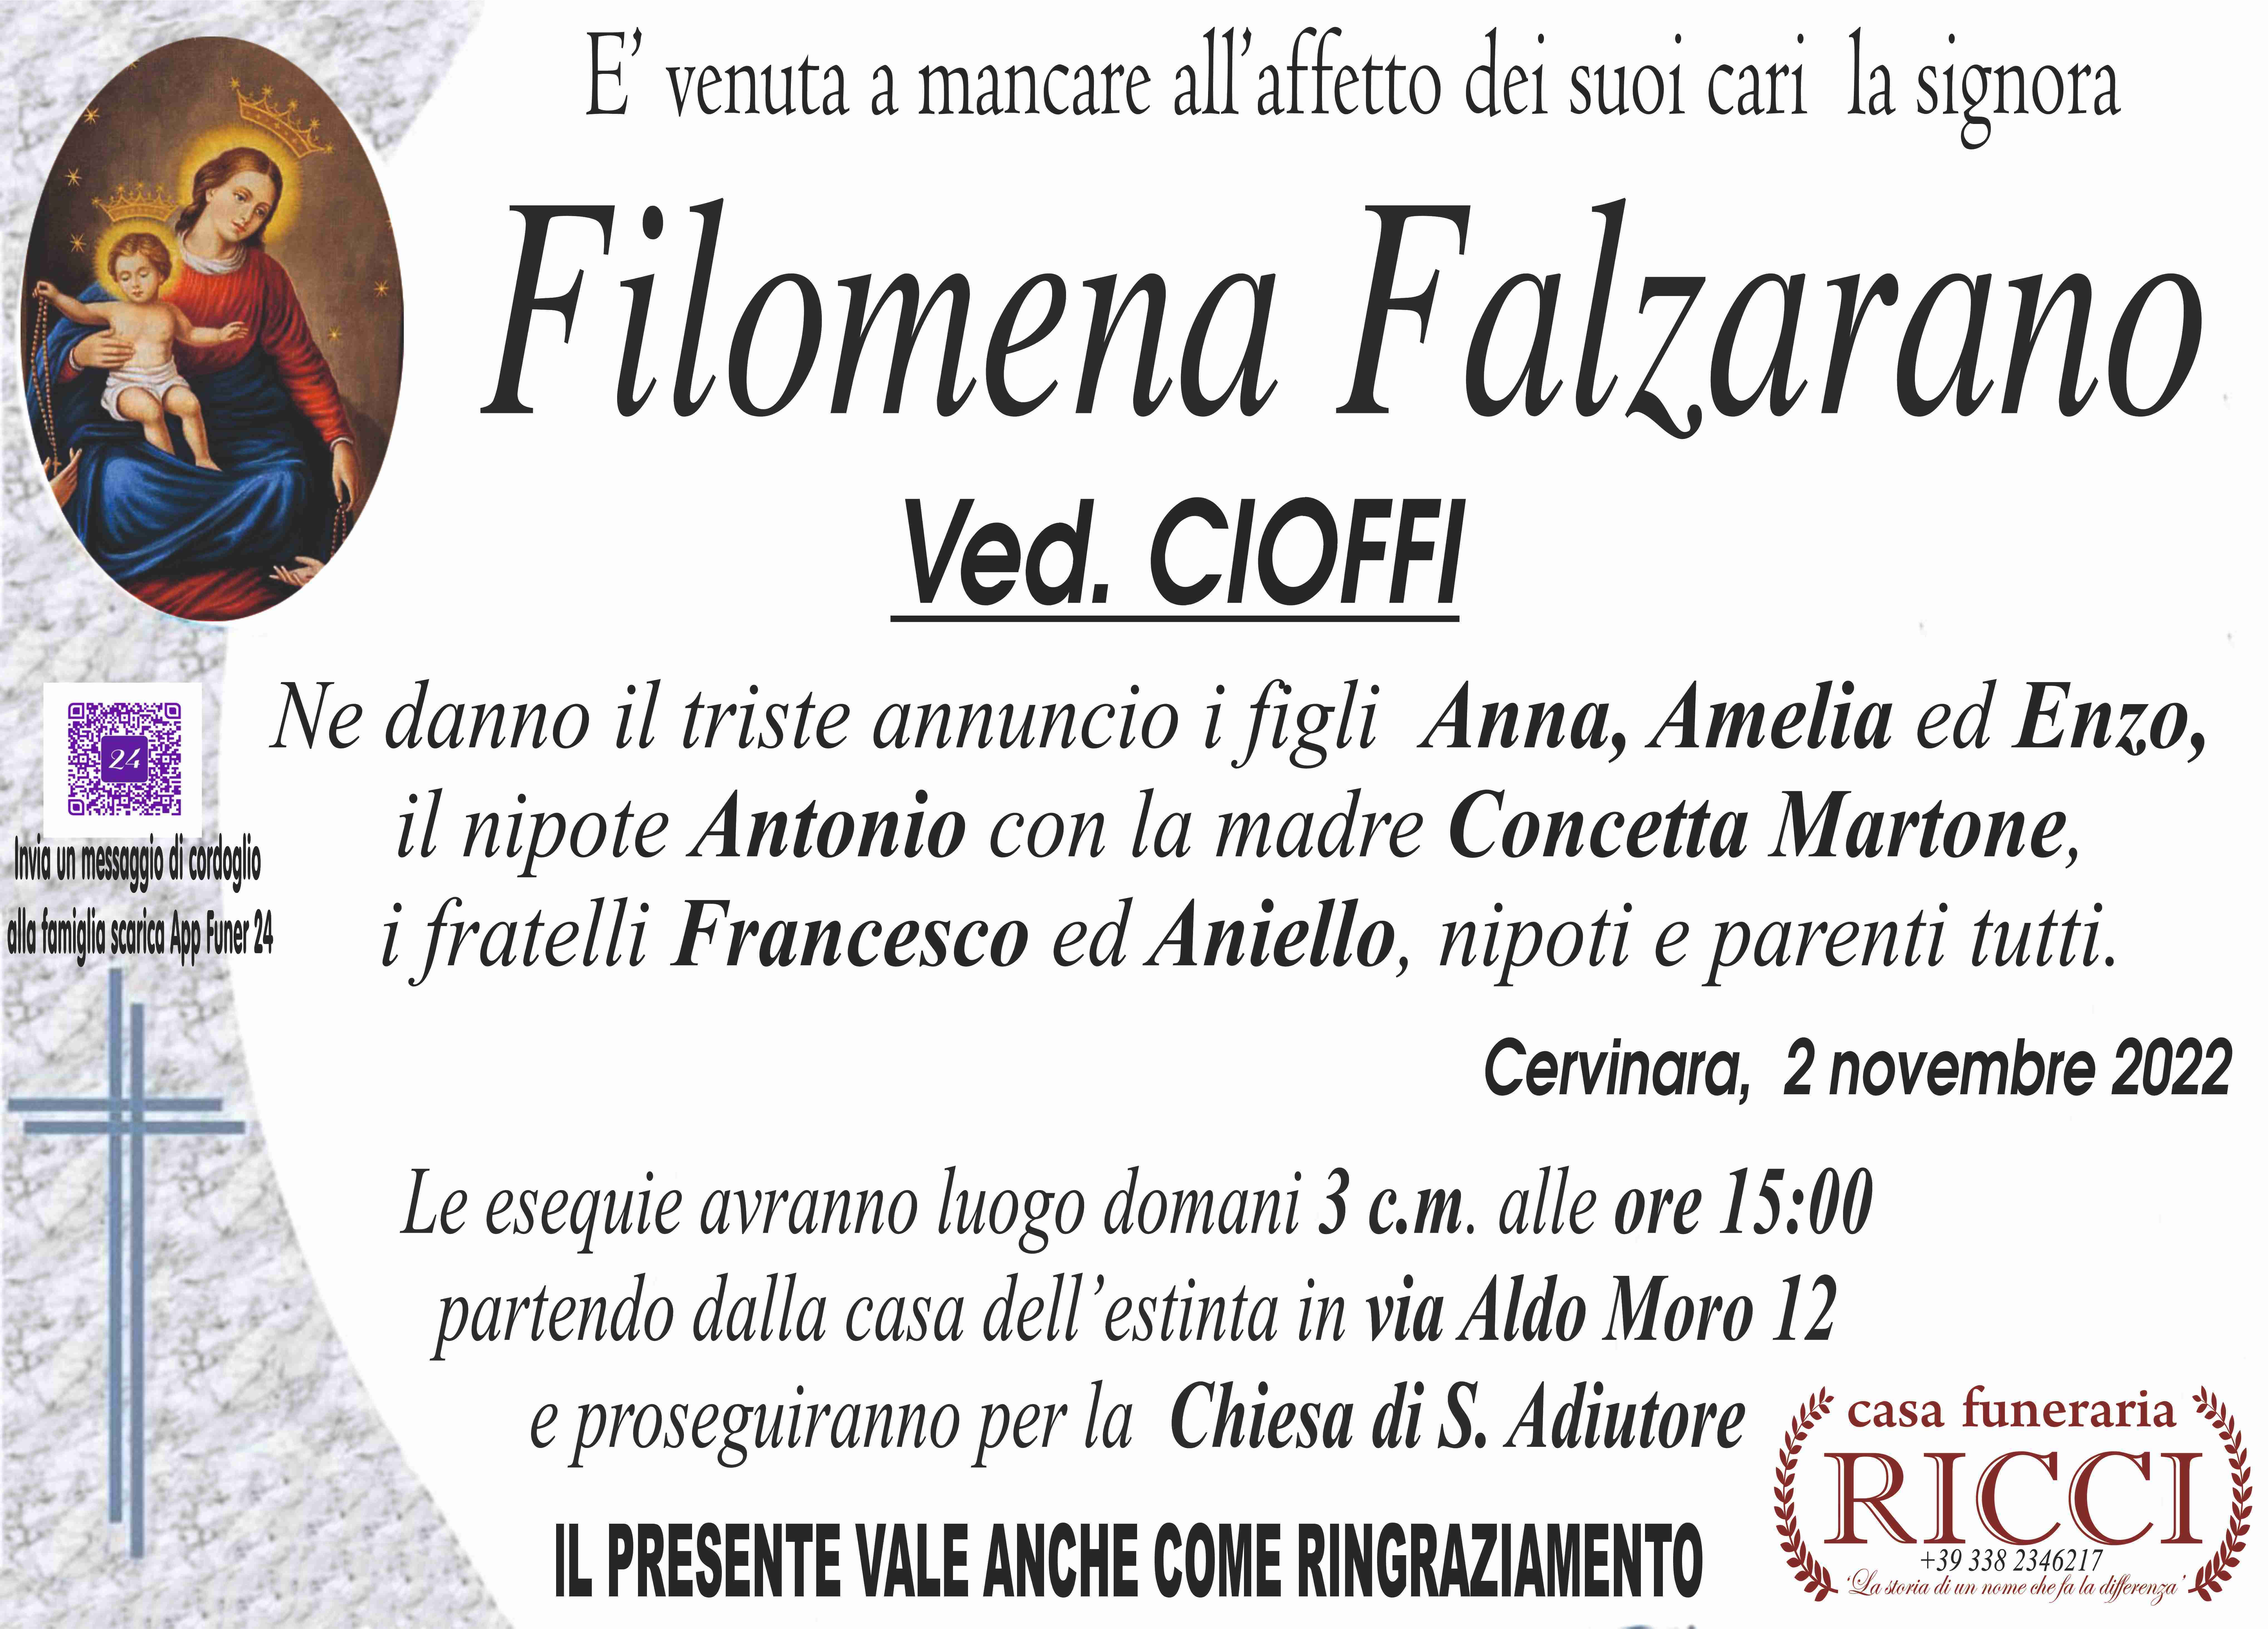 Filomena Falzarano